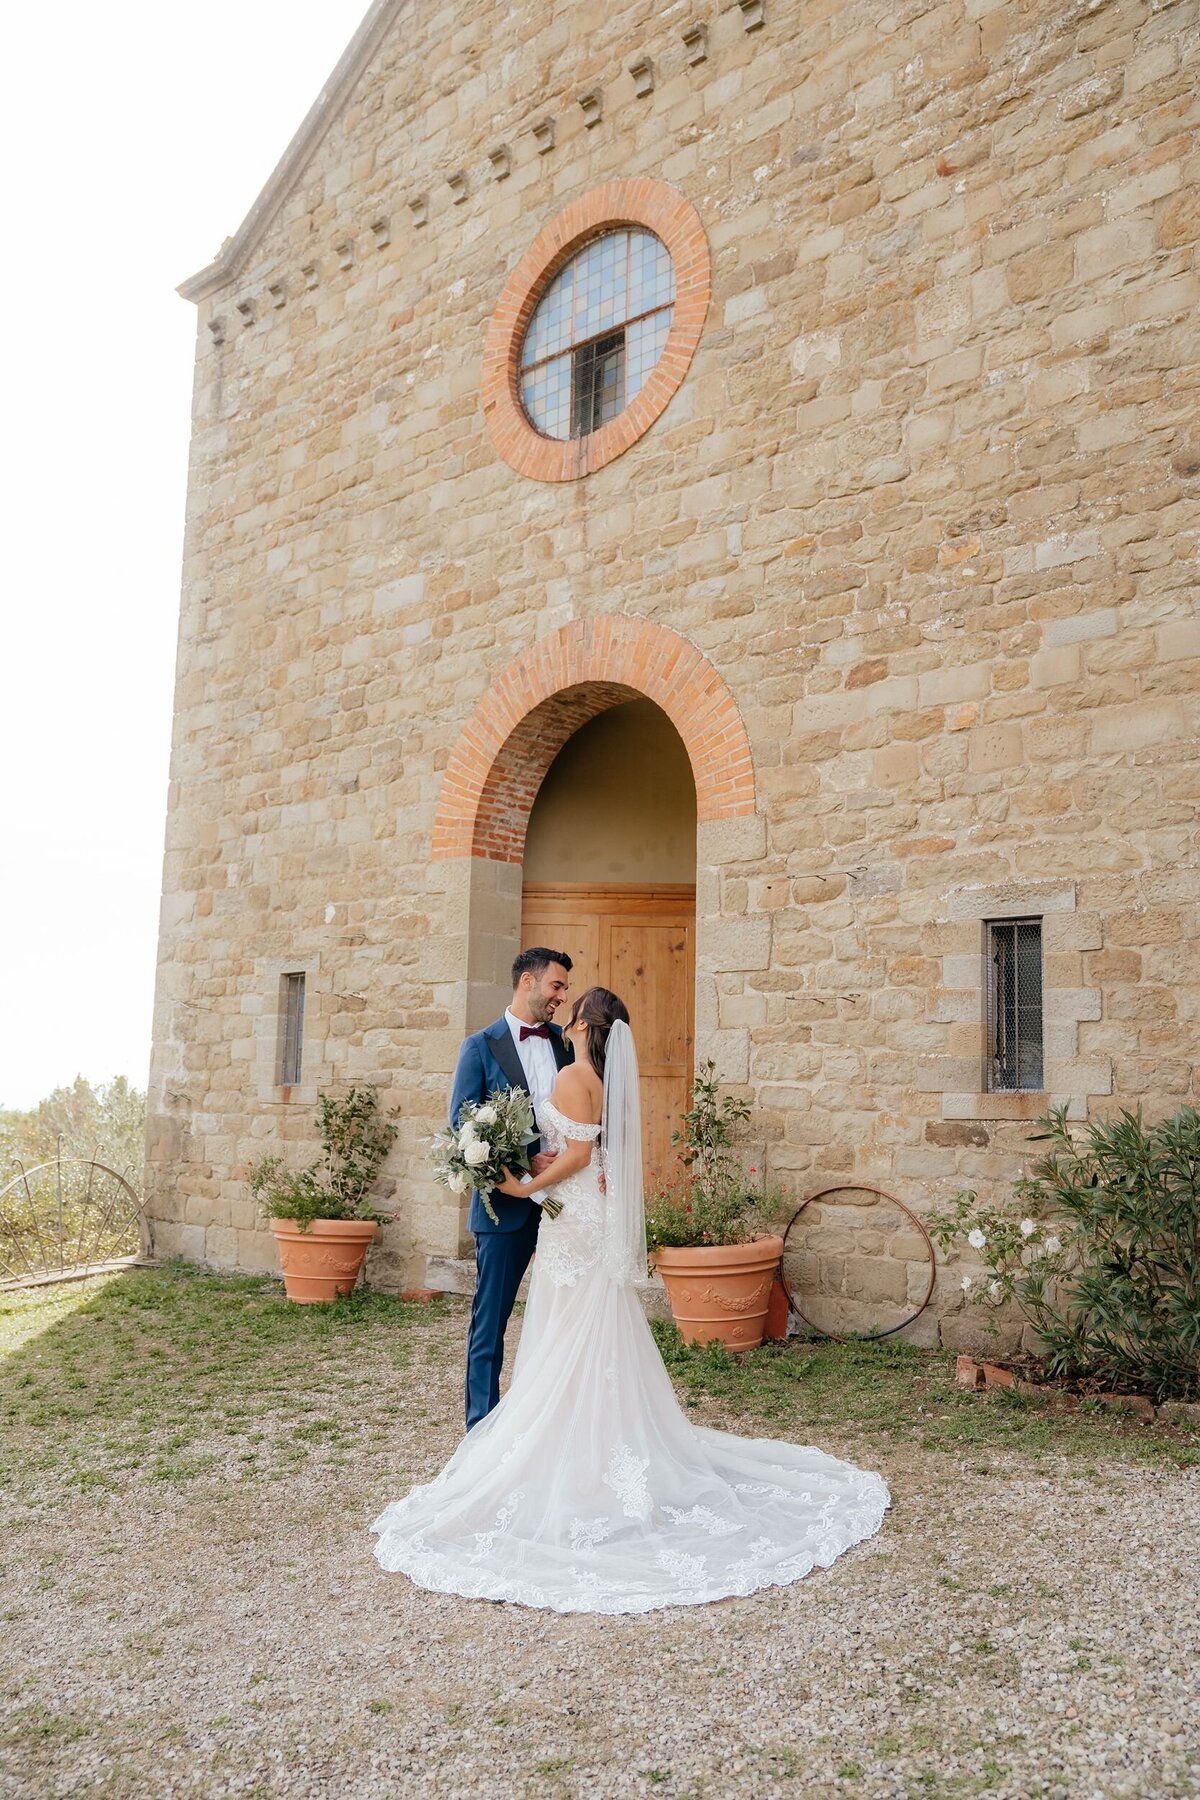 Pete-and-Brenna-Tuscany-Italy-Destination-Wedding-26